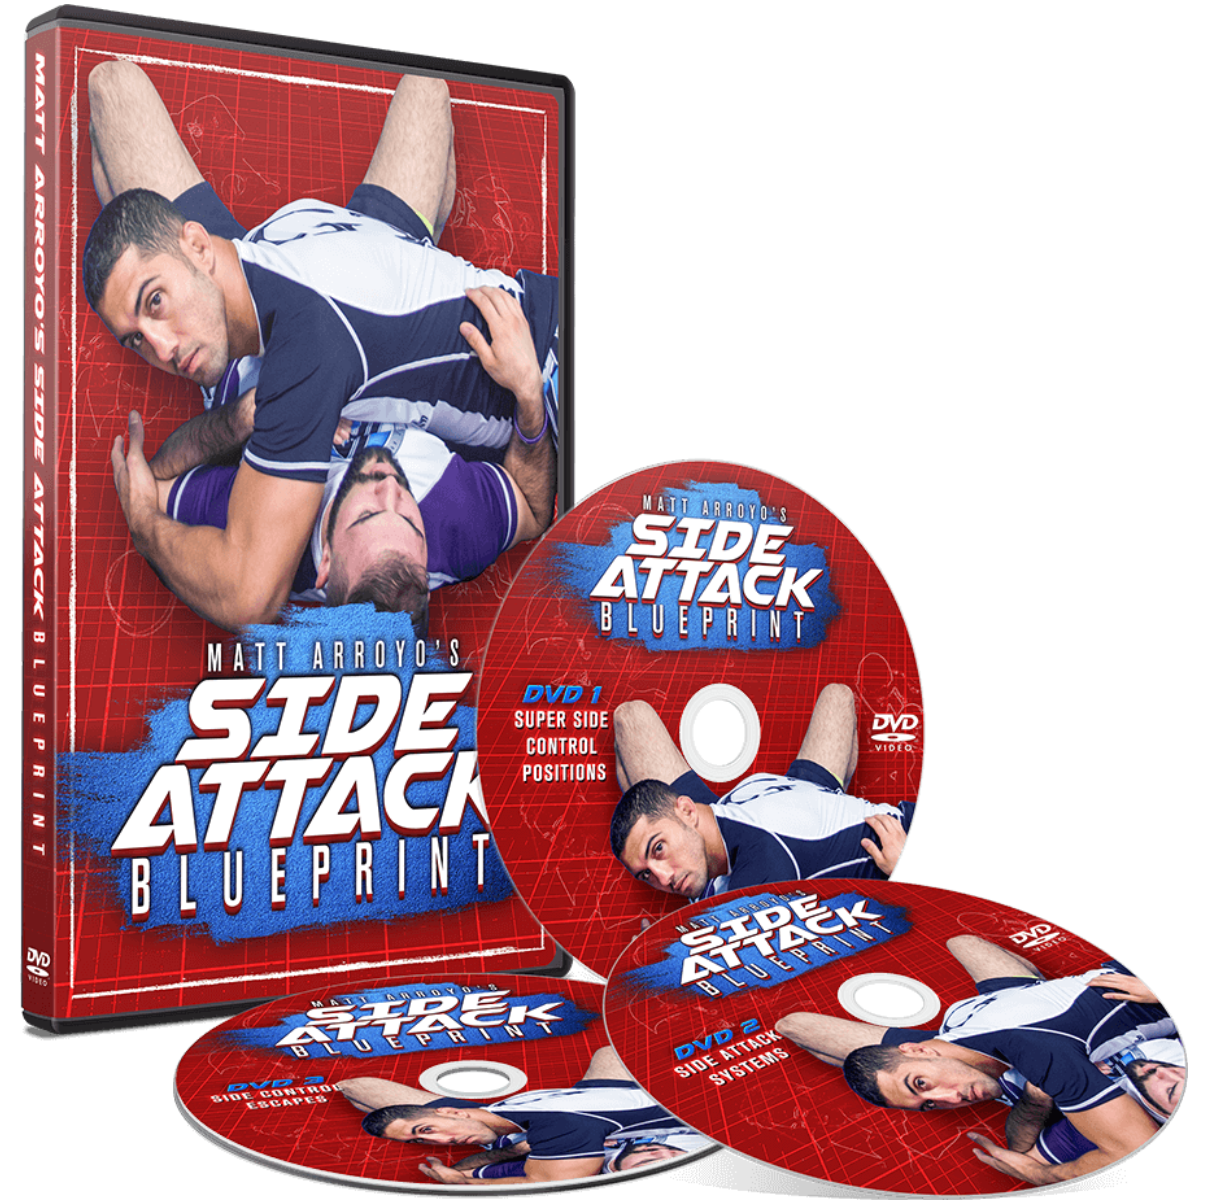 Side Attack Blueprint 3 DVD Set with Matt Arroyo - Budovideos Inc